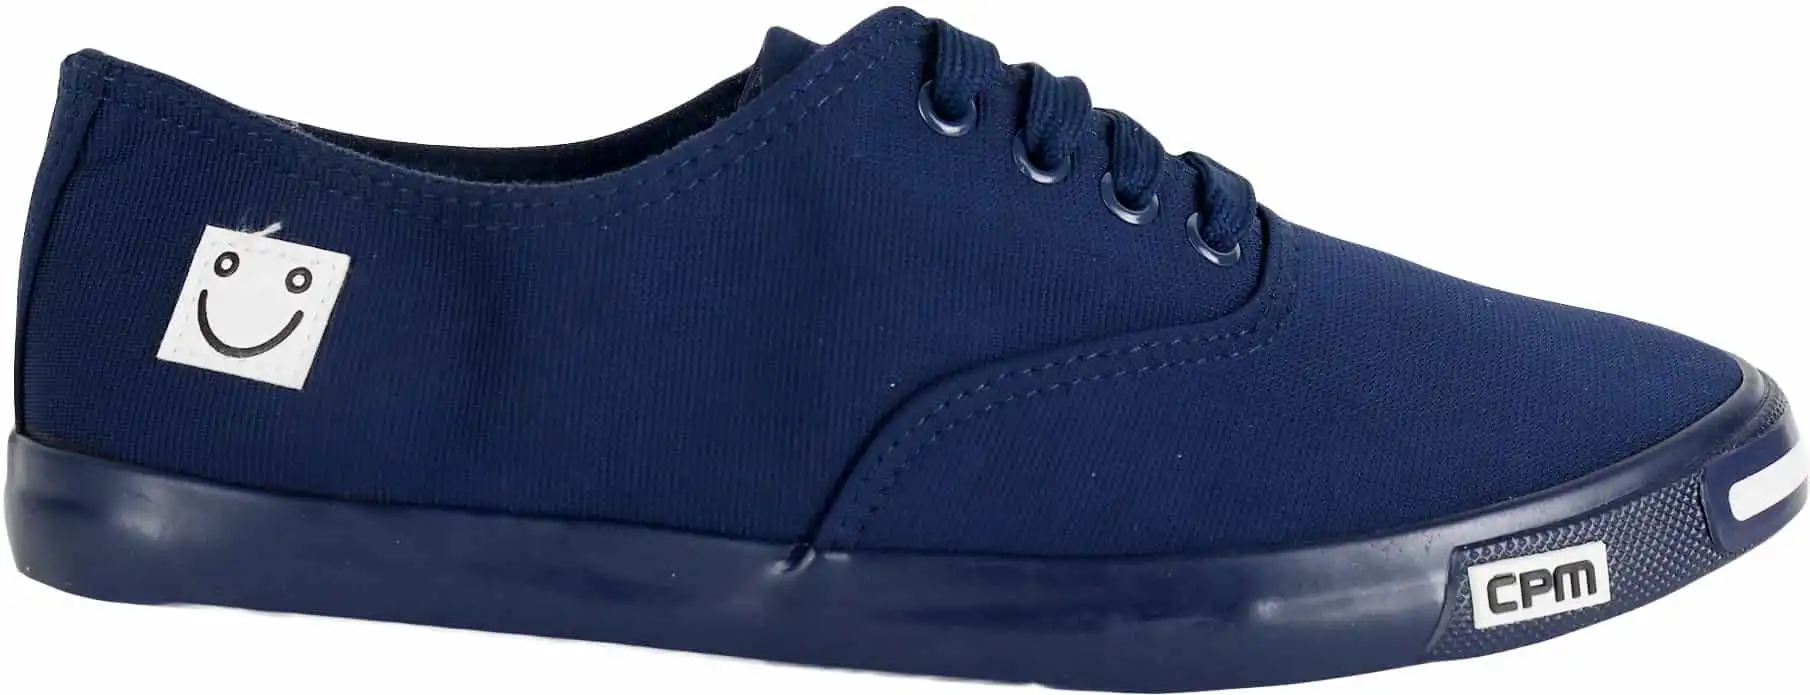 Buy CIPRAMO SPORTS Men Navy Blue Canvas Sneakers - Casual Shoes for Men  17045888 | Myntra